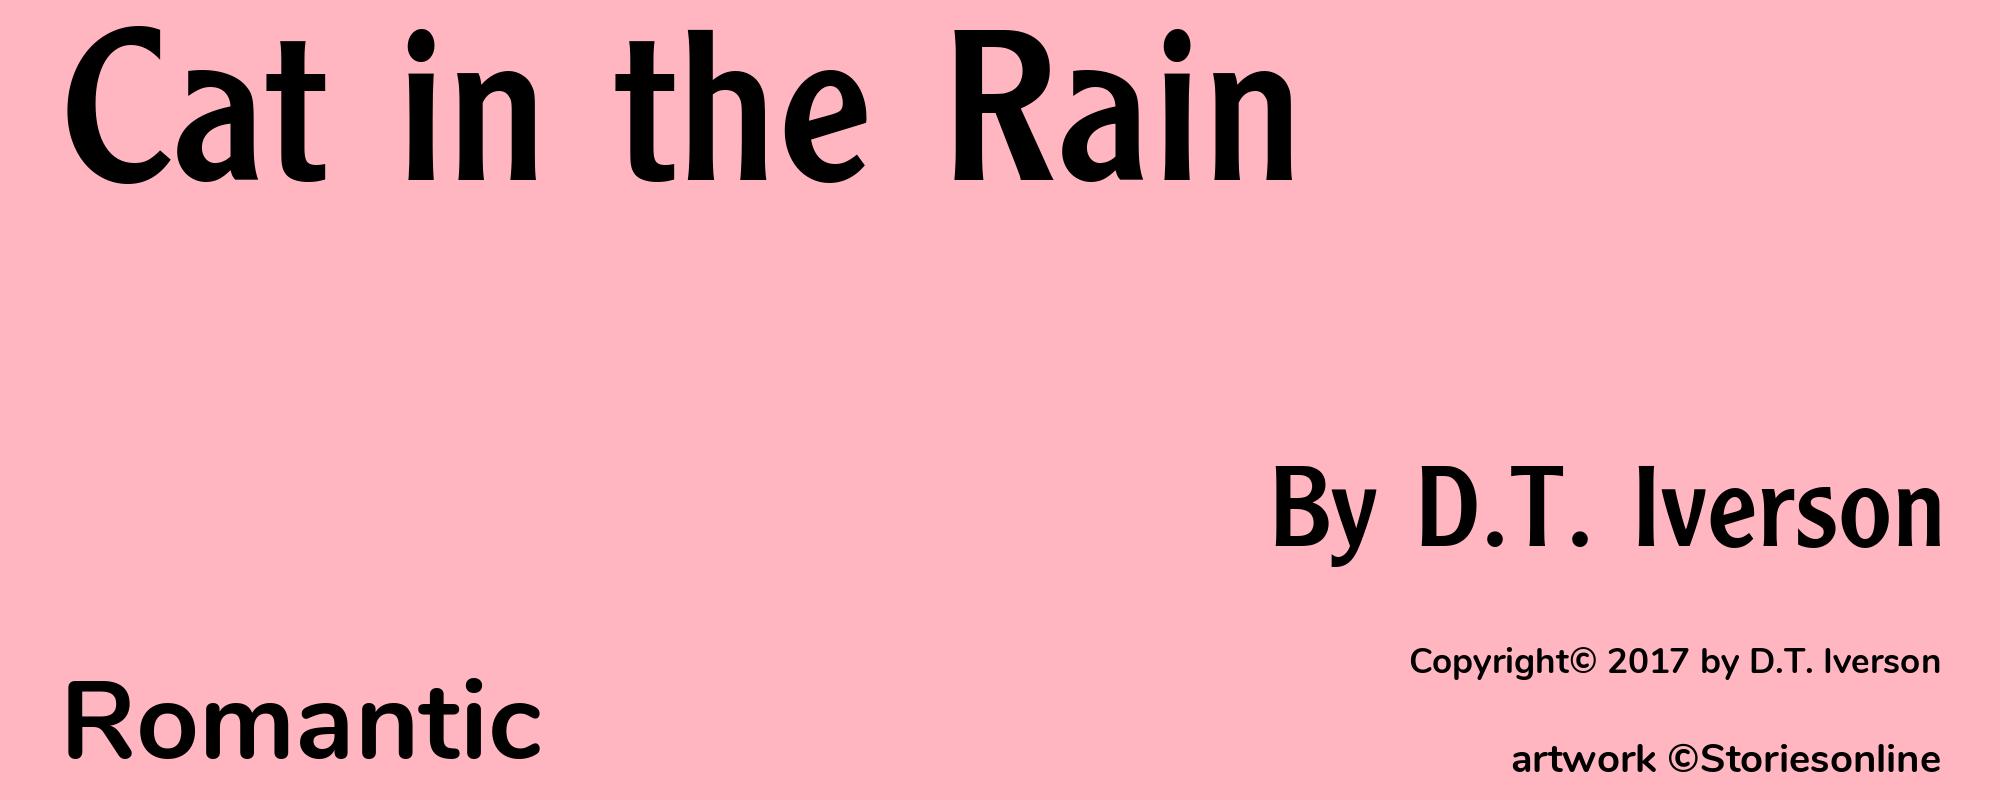 Cat in the Rain - Cover